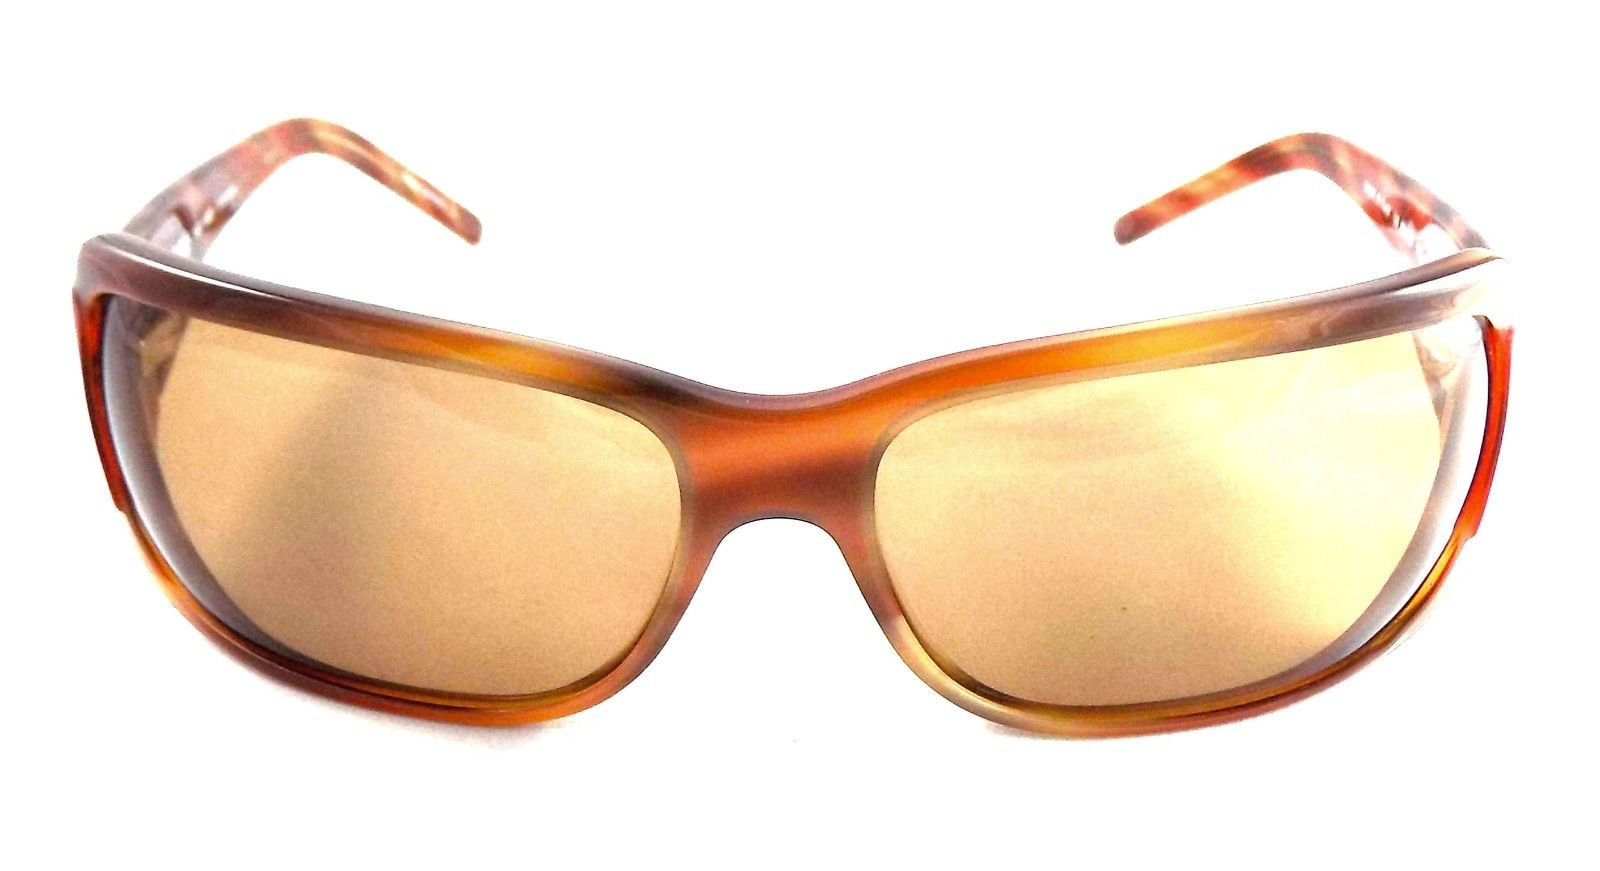 2-Hugo Boss Sunglasses HB 11883 LB 60x12x115 Tortoise Red / Brown Lens ITALY-Does not apply-IKSpecs